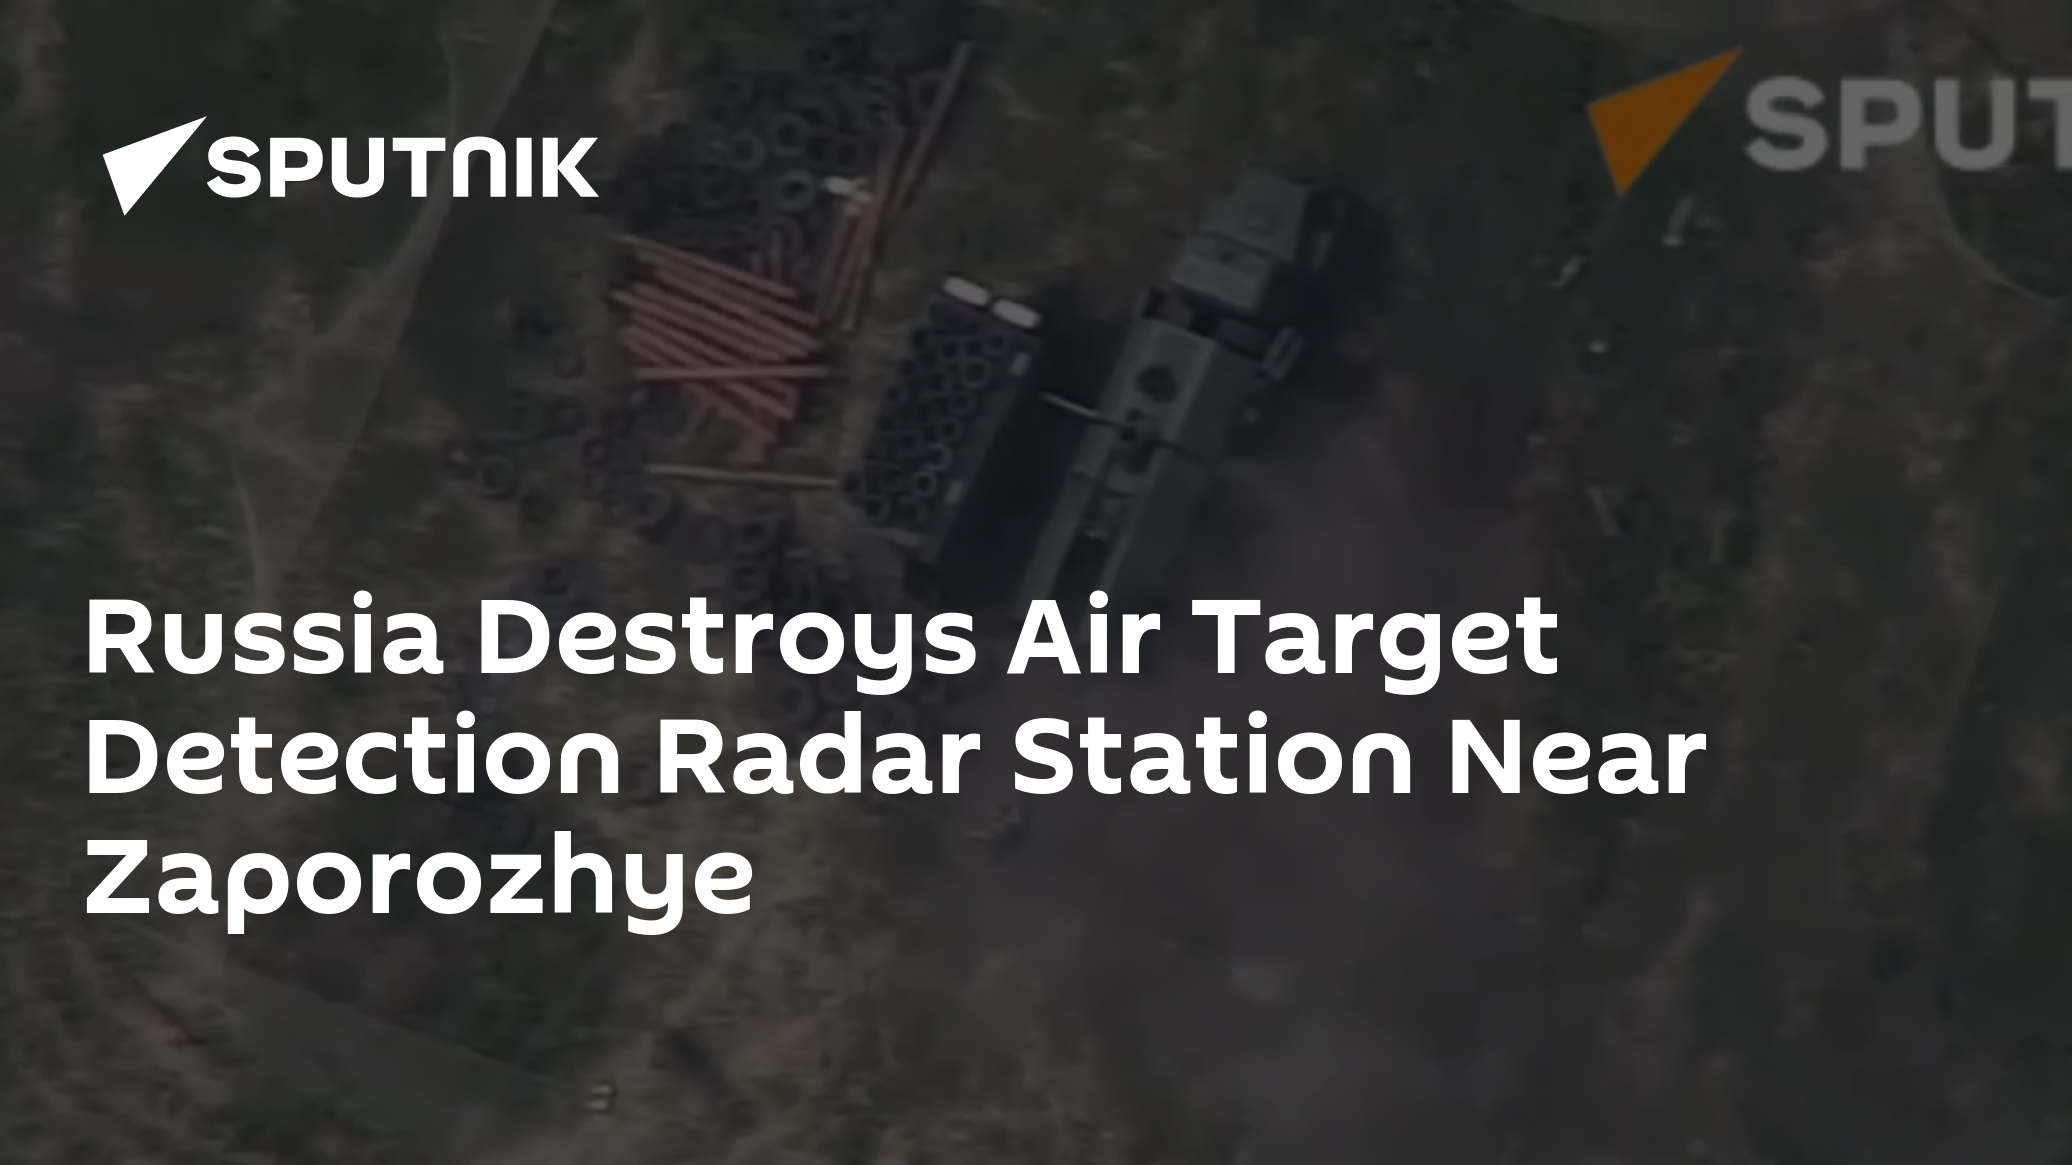 Russia Destroys Air Target Detection Radar Station Near Zaporozhye